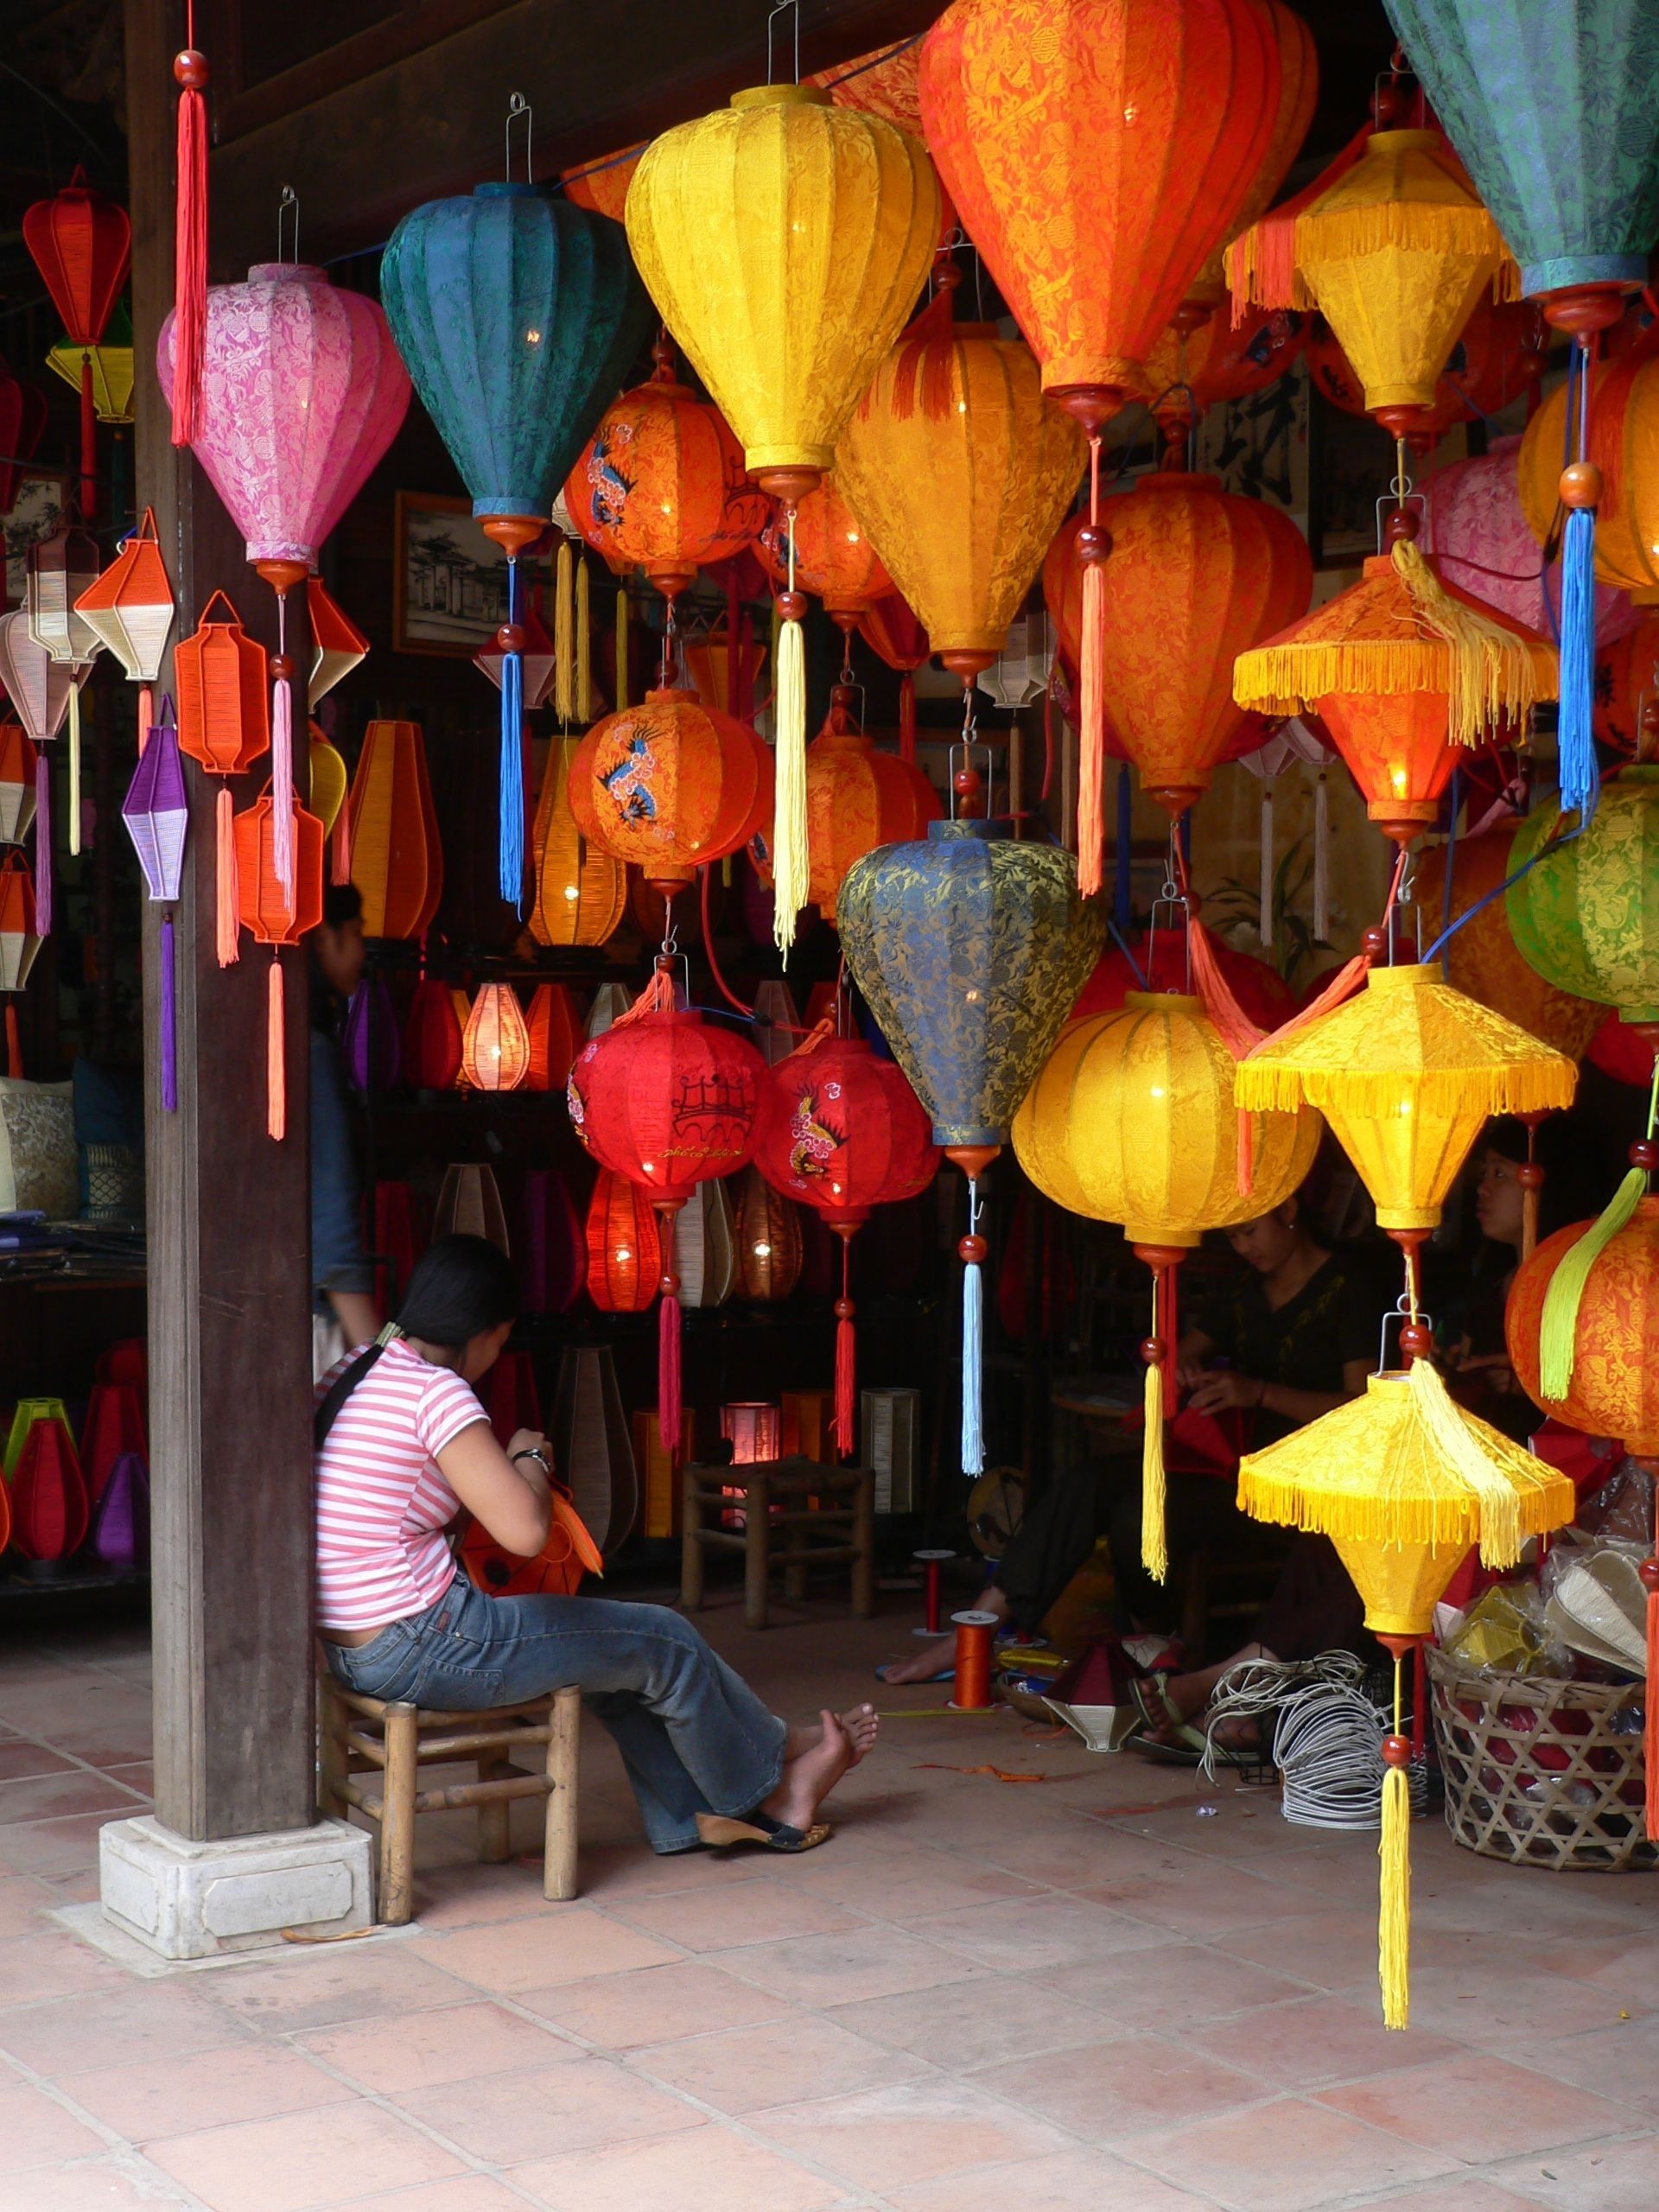 Lantern Shop In Vietnam | Markets – Vendors | Pinterest | Vietnam Throughout Outdoor Vietnamese Lanterns (View 15 of 20)